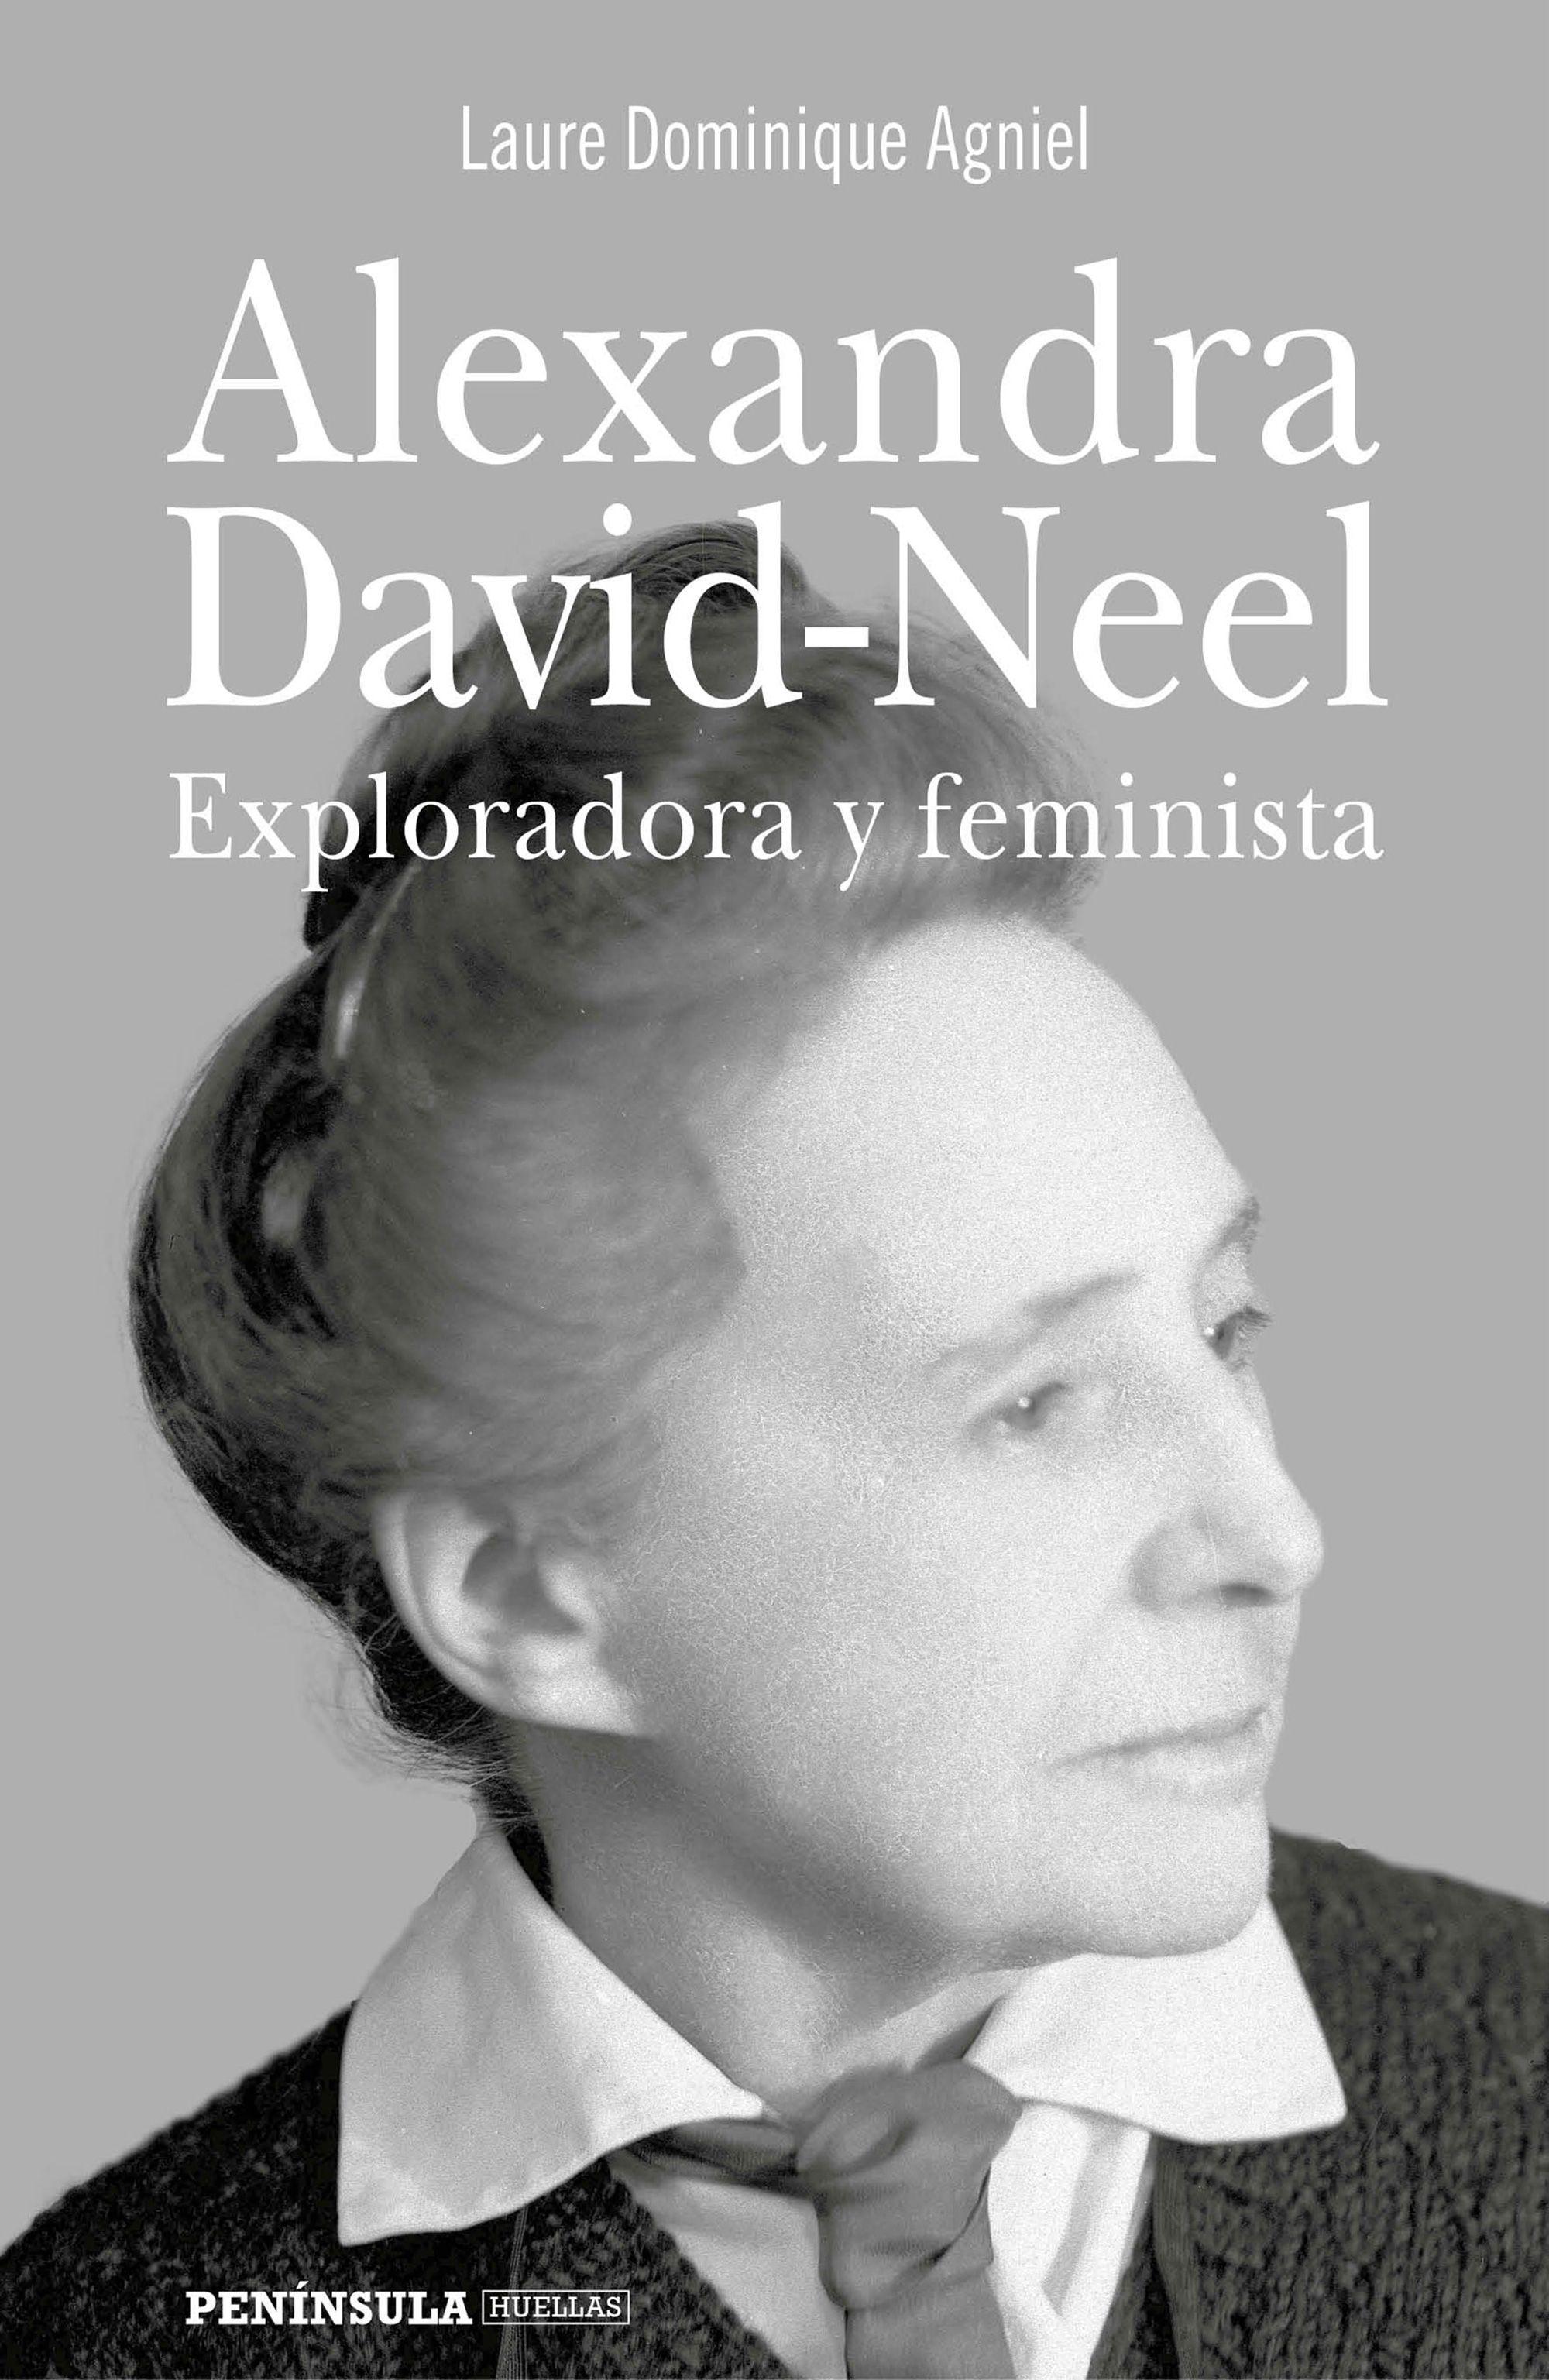 Alexandra David-Neel "Exploradora y Feminista"